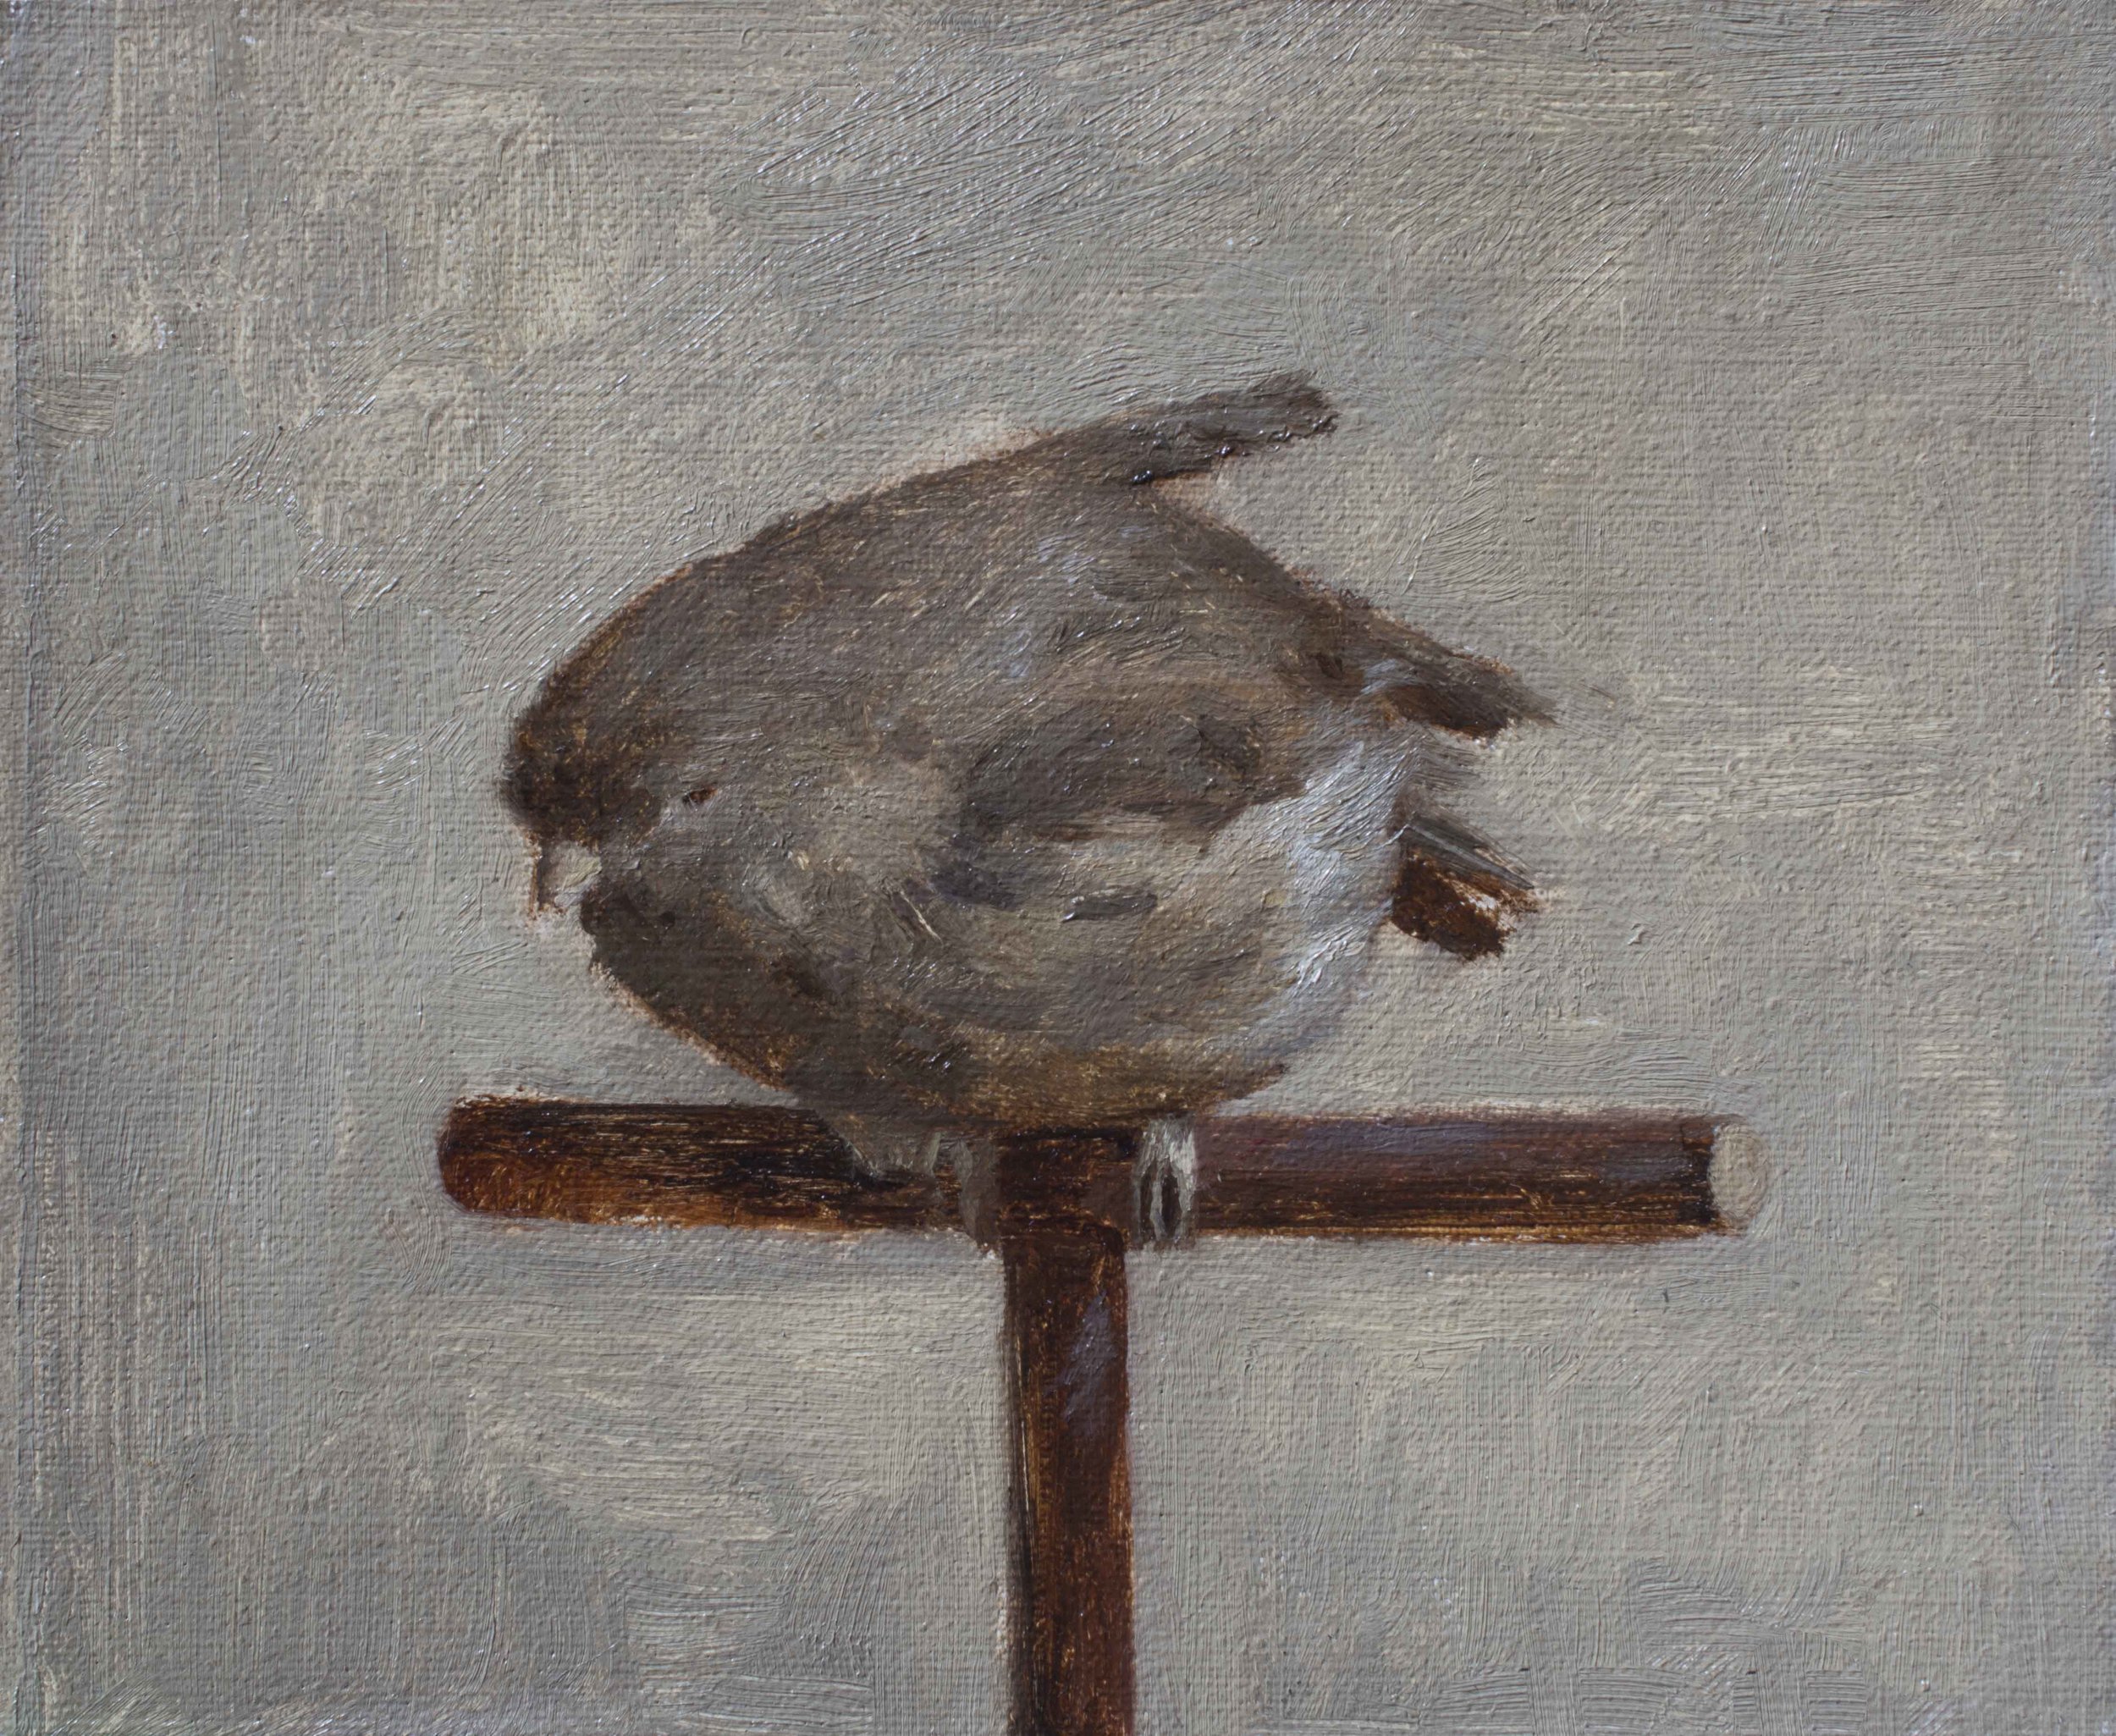 Little Sparrow. Oil on Panel. 4x5